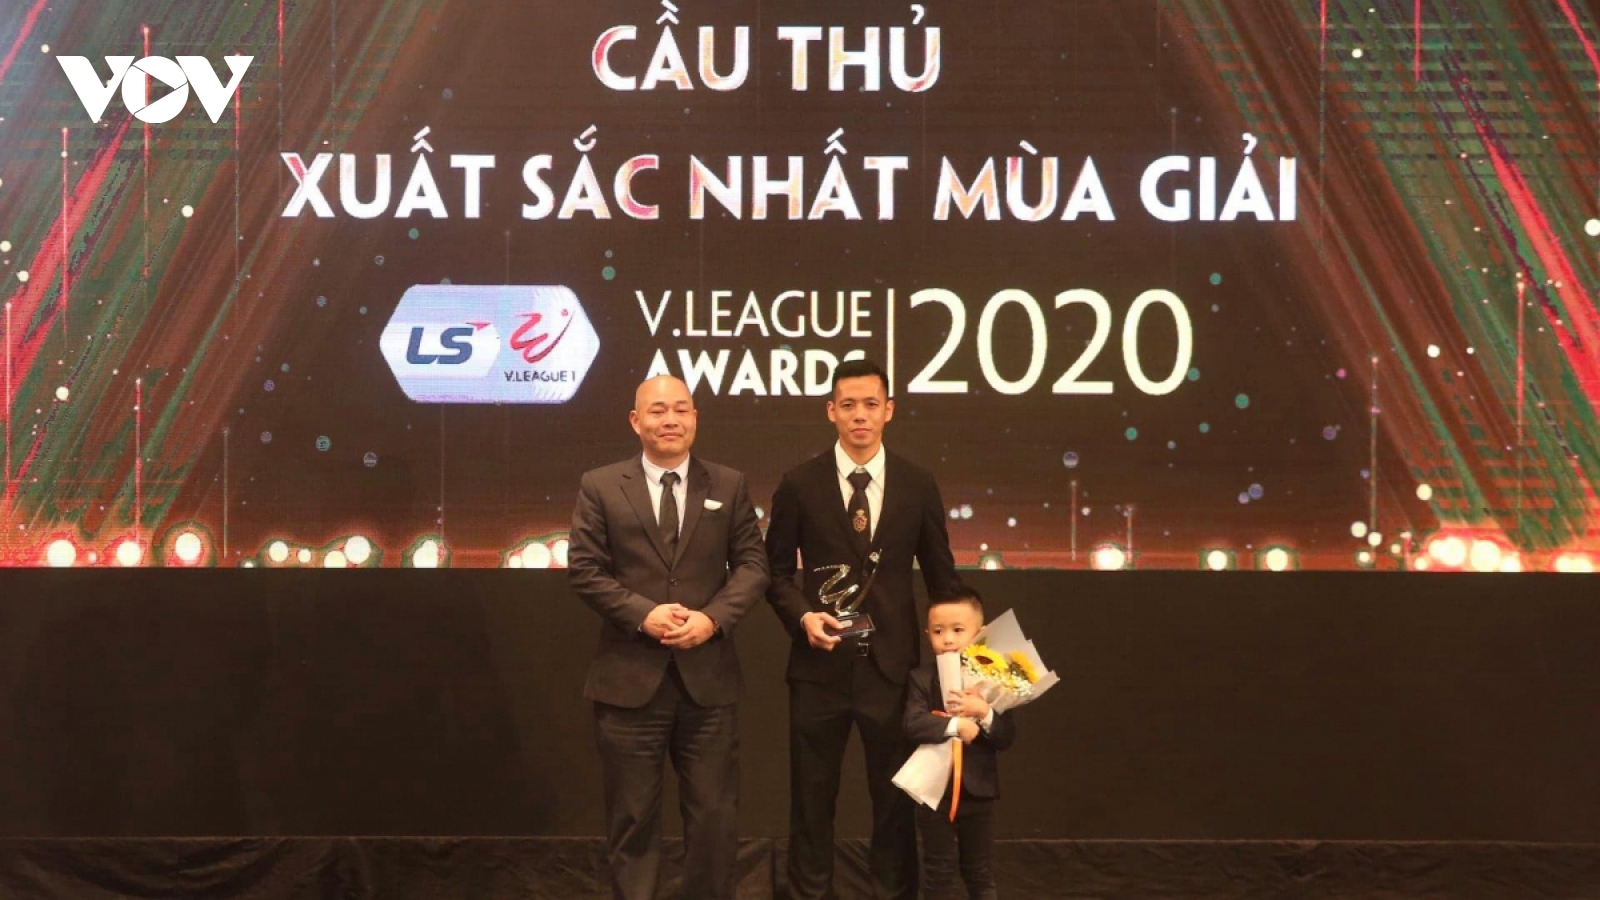 Van Quyet named as best footballer at V.League Awards